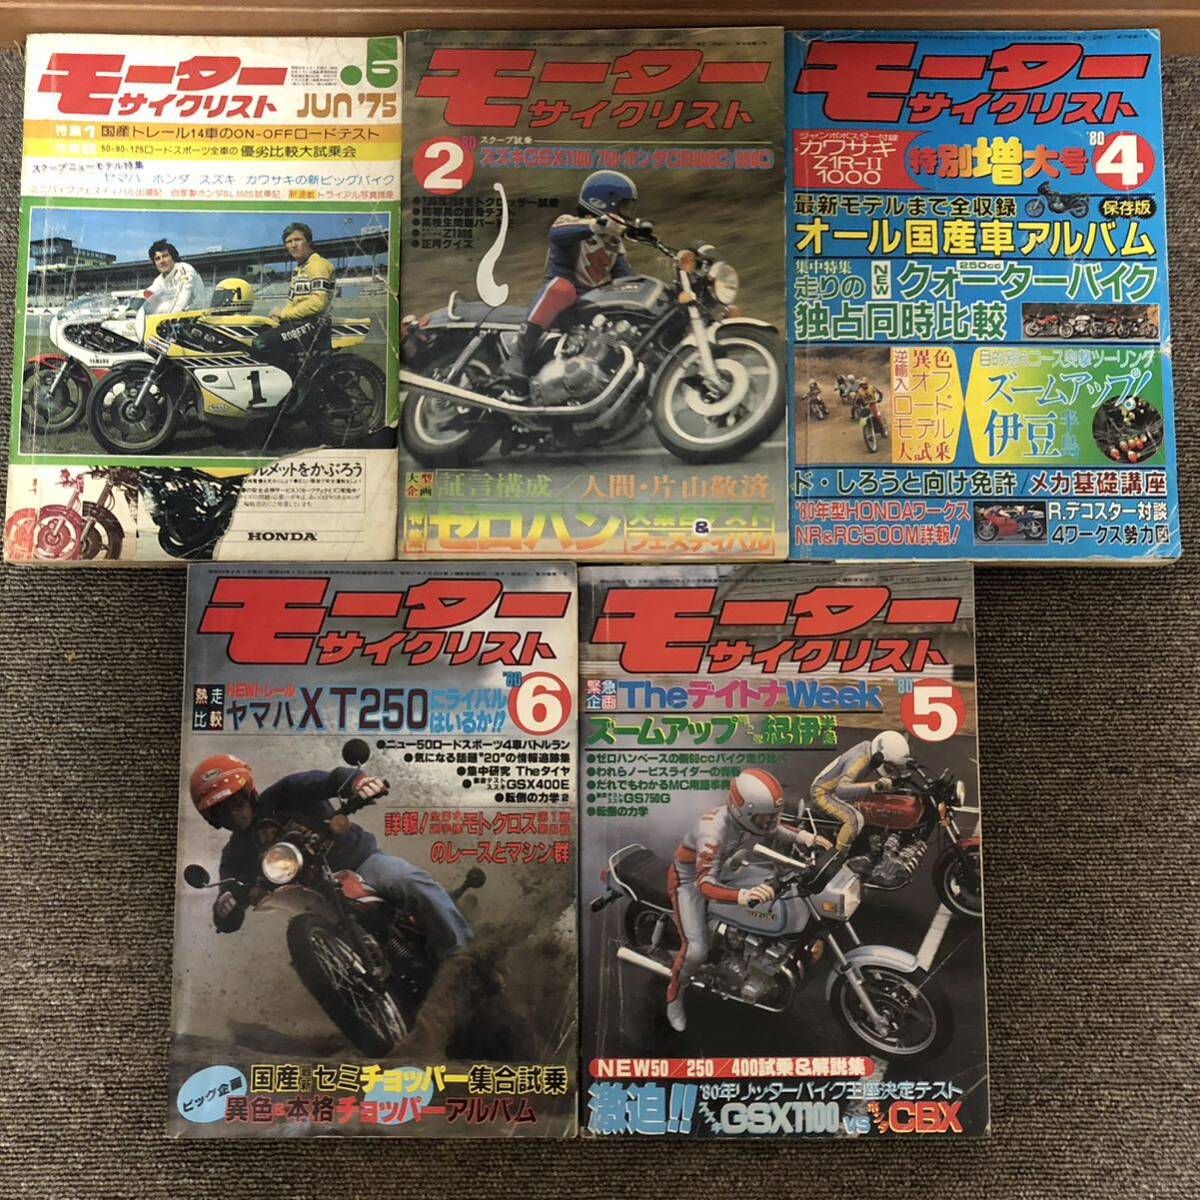 ④ Motorcyclist 1975 год 1980 год 1981 год выпуск совместно # мотоцикл журнал мотоцикл мотоцикл # M0417